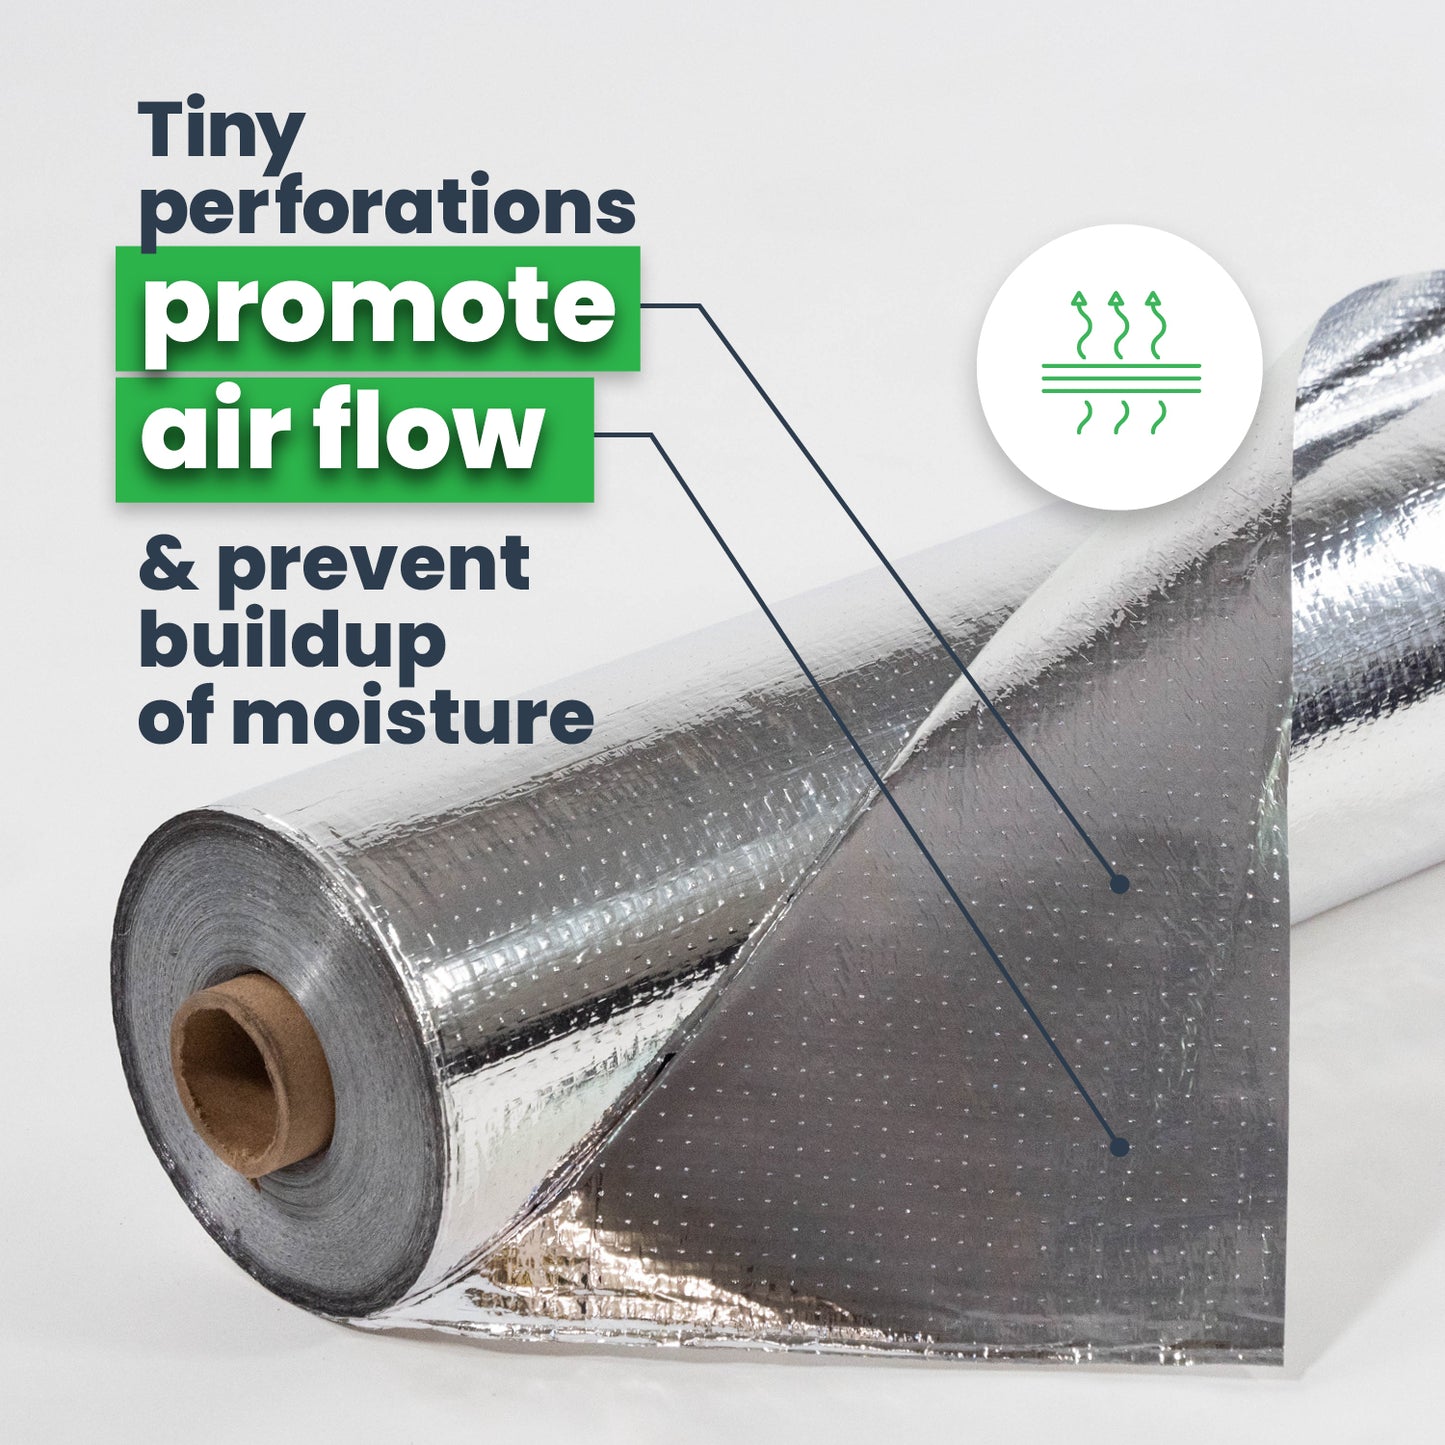 Tiny perforations promote air flow, prevent buildup of moisture